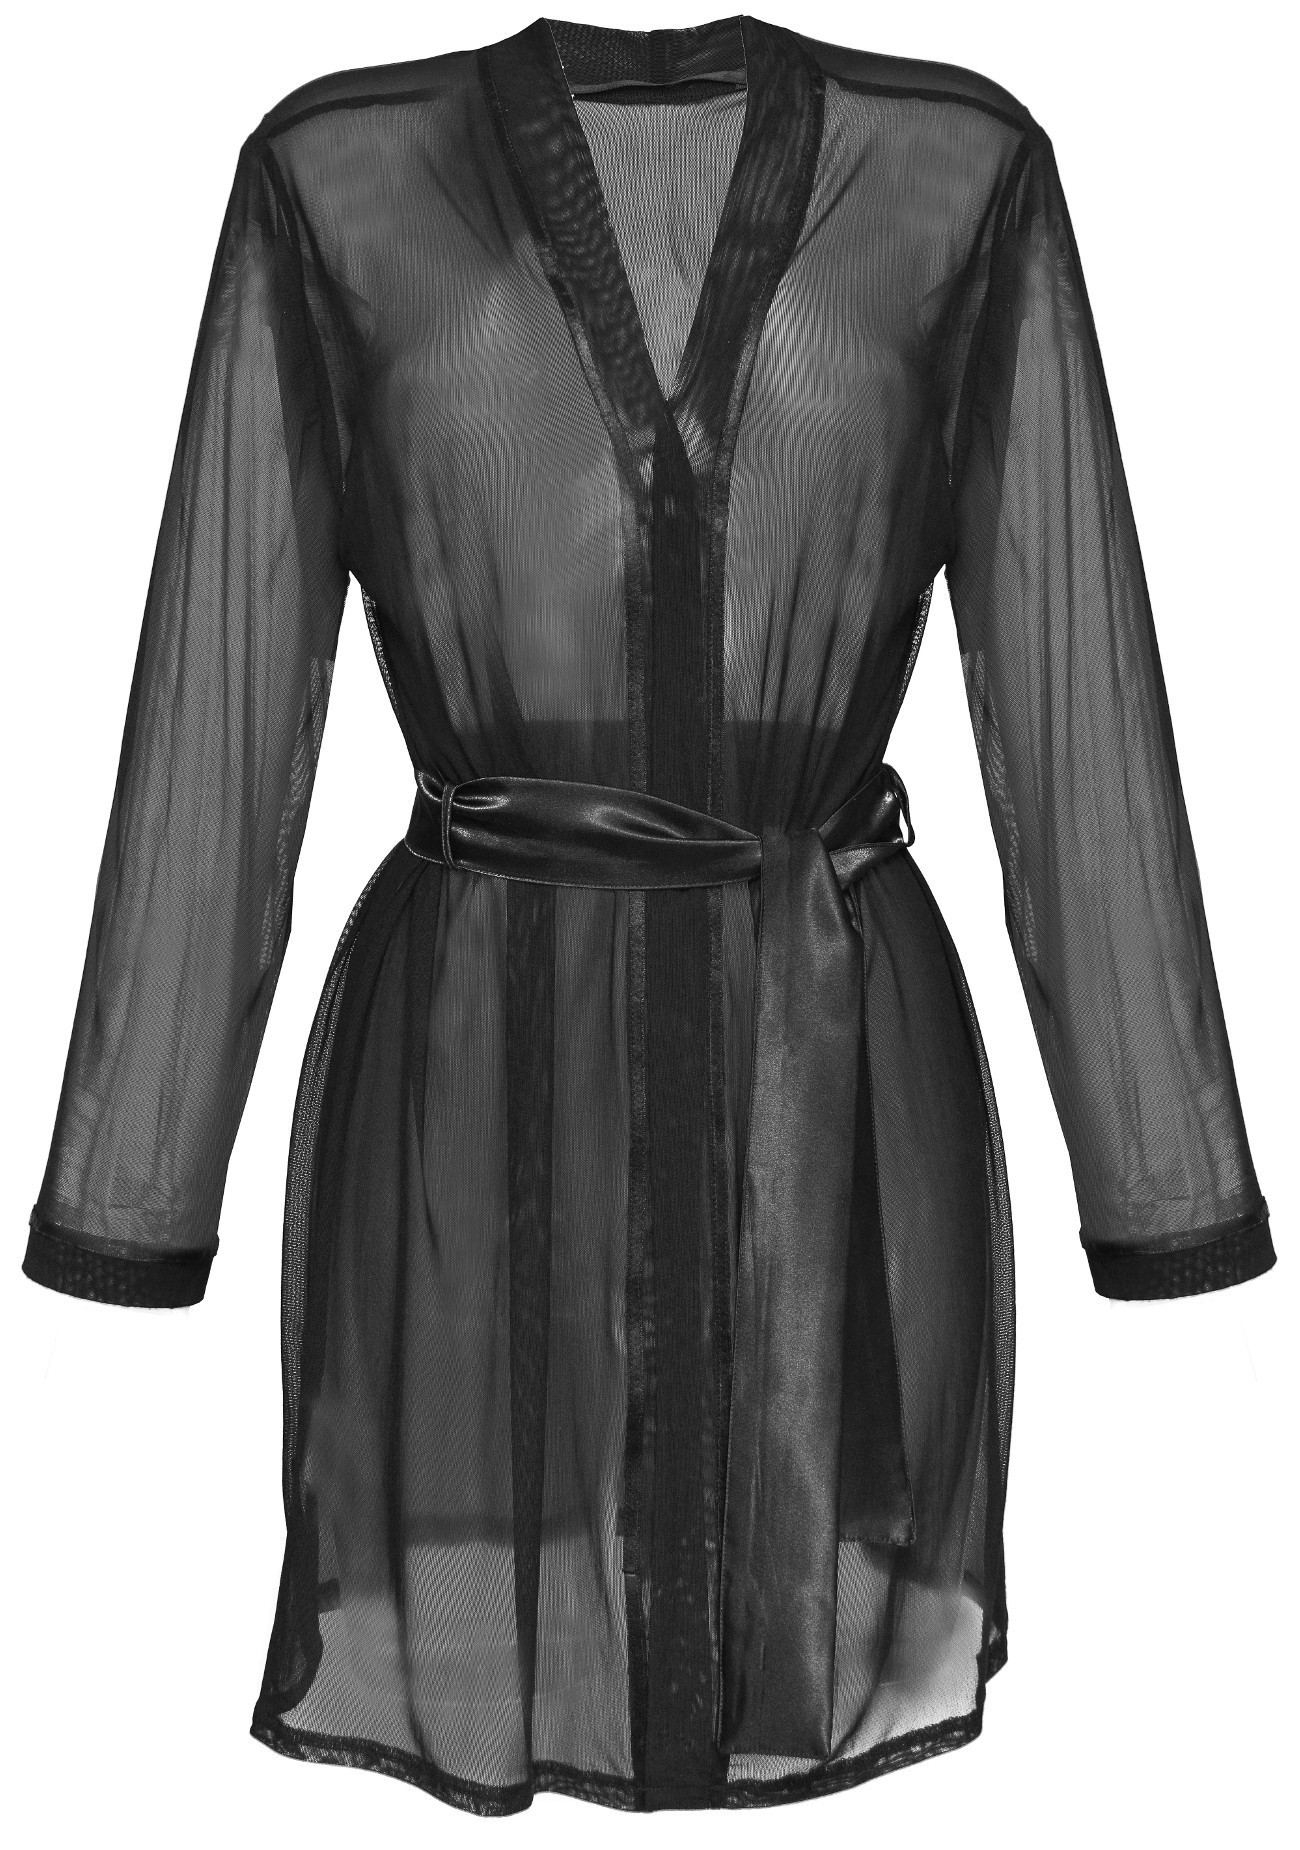 Housecoat model 18226921 Black - DKaren Velikost: XS, Barva: černá